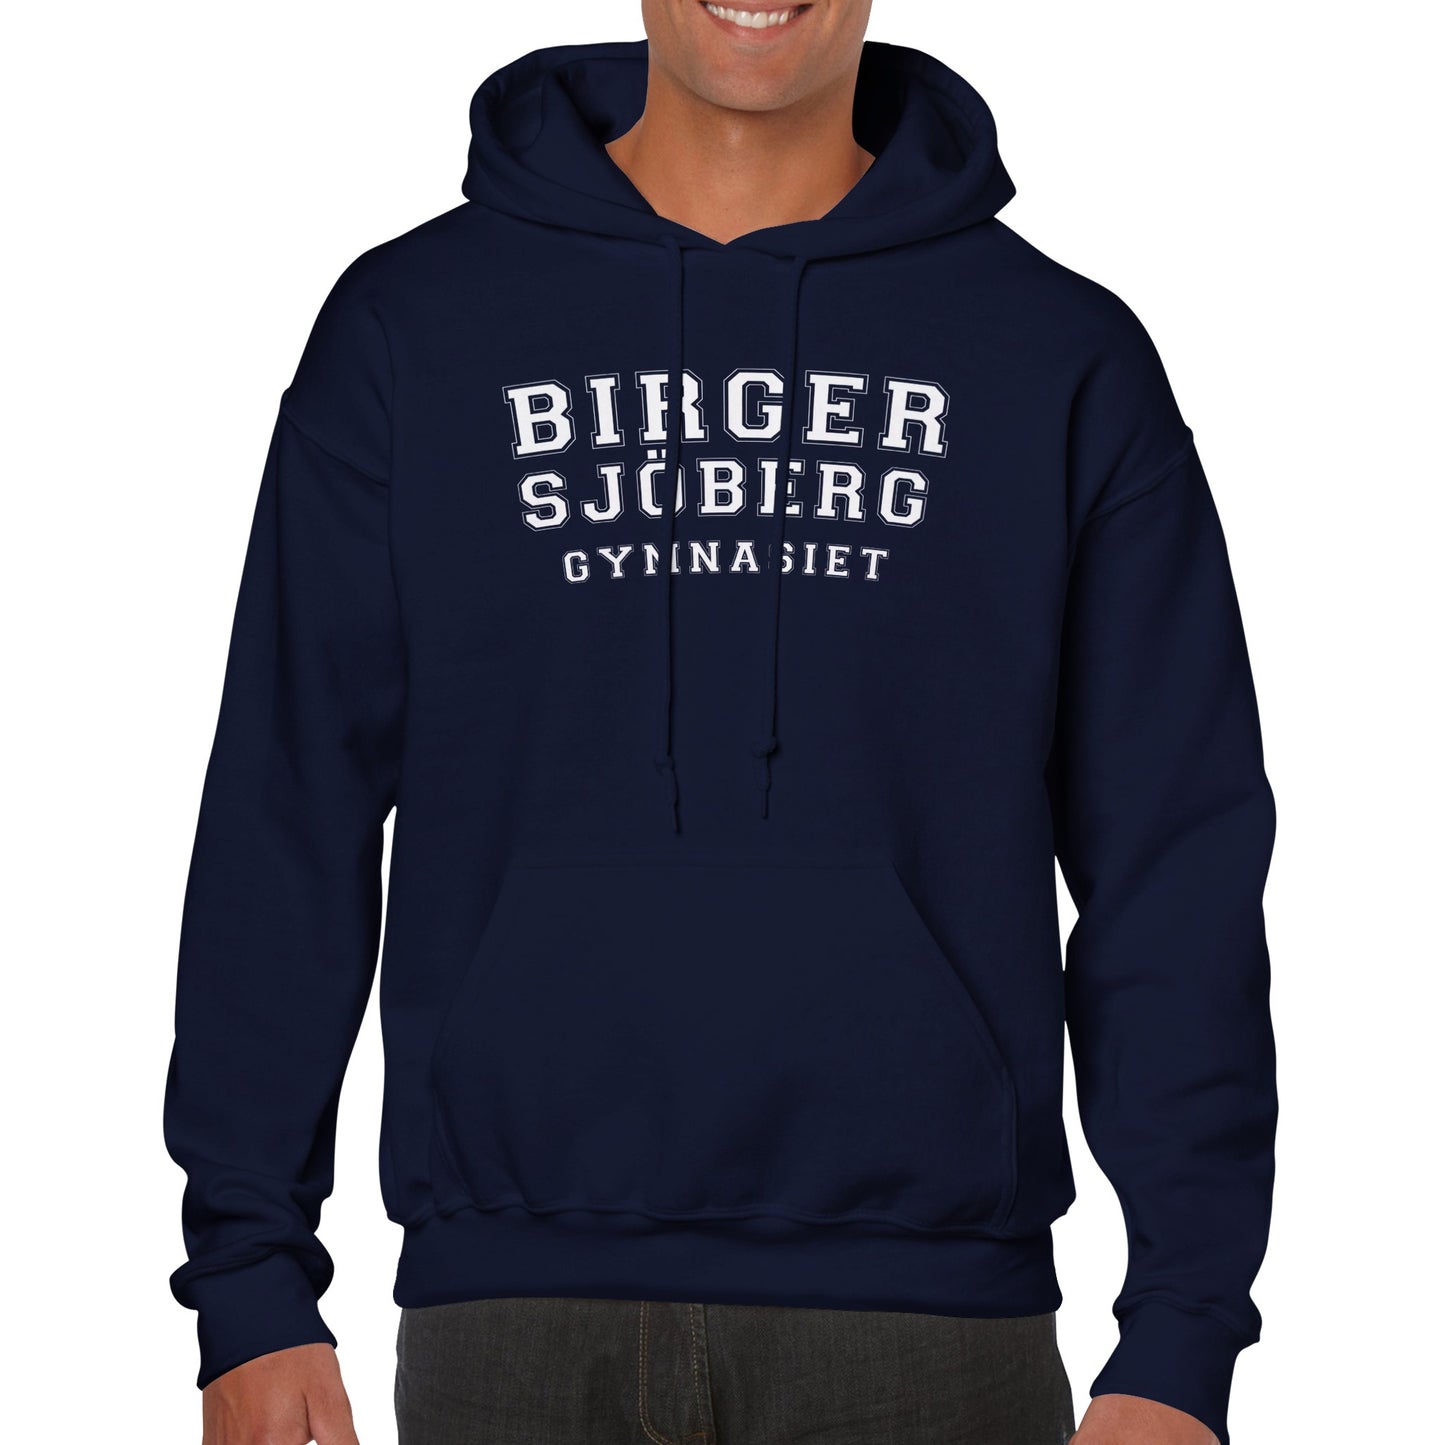 BIRGER SJÖBERGGYMNASIET - Unisex hoodie - 5 färger